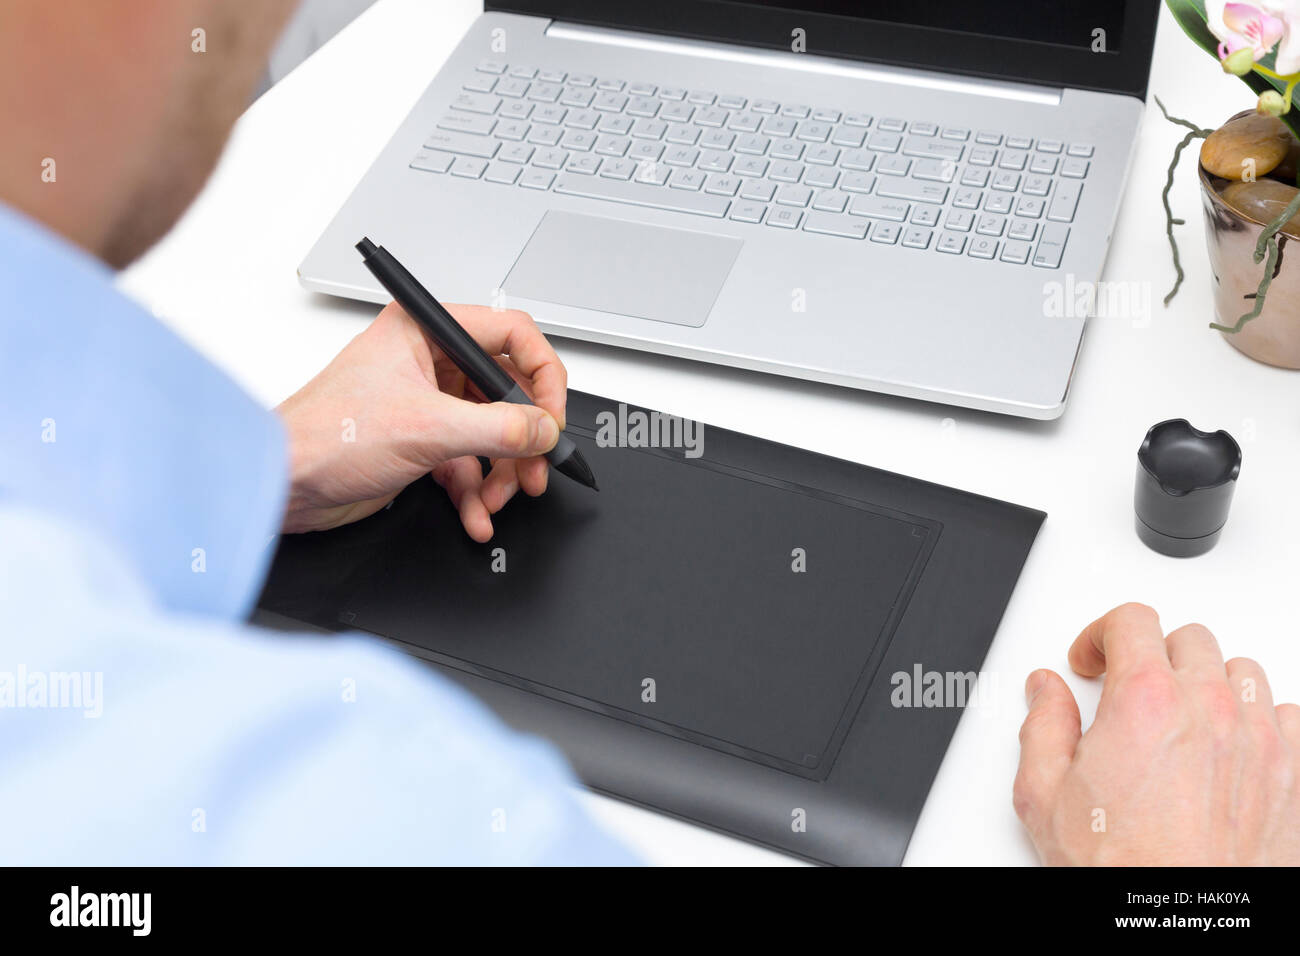 graphic designer drawing on digital pen tablet Stock Photo